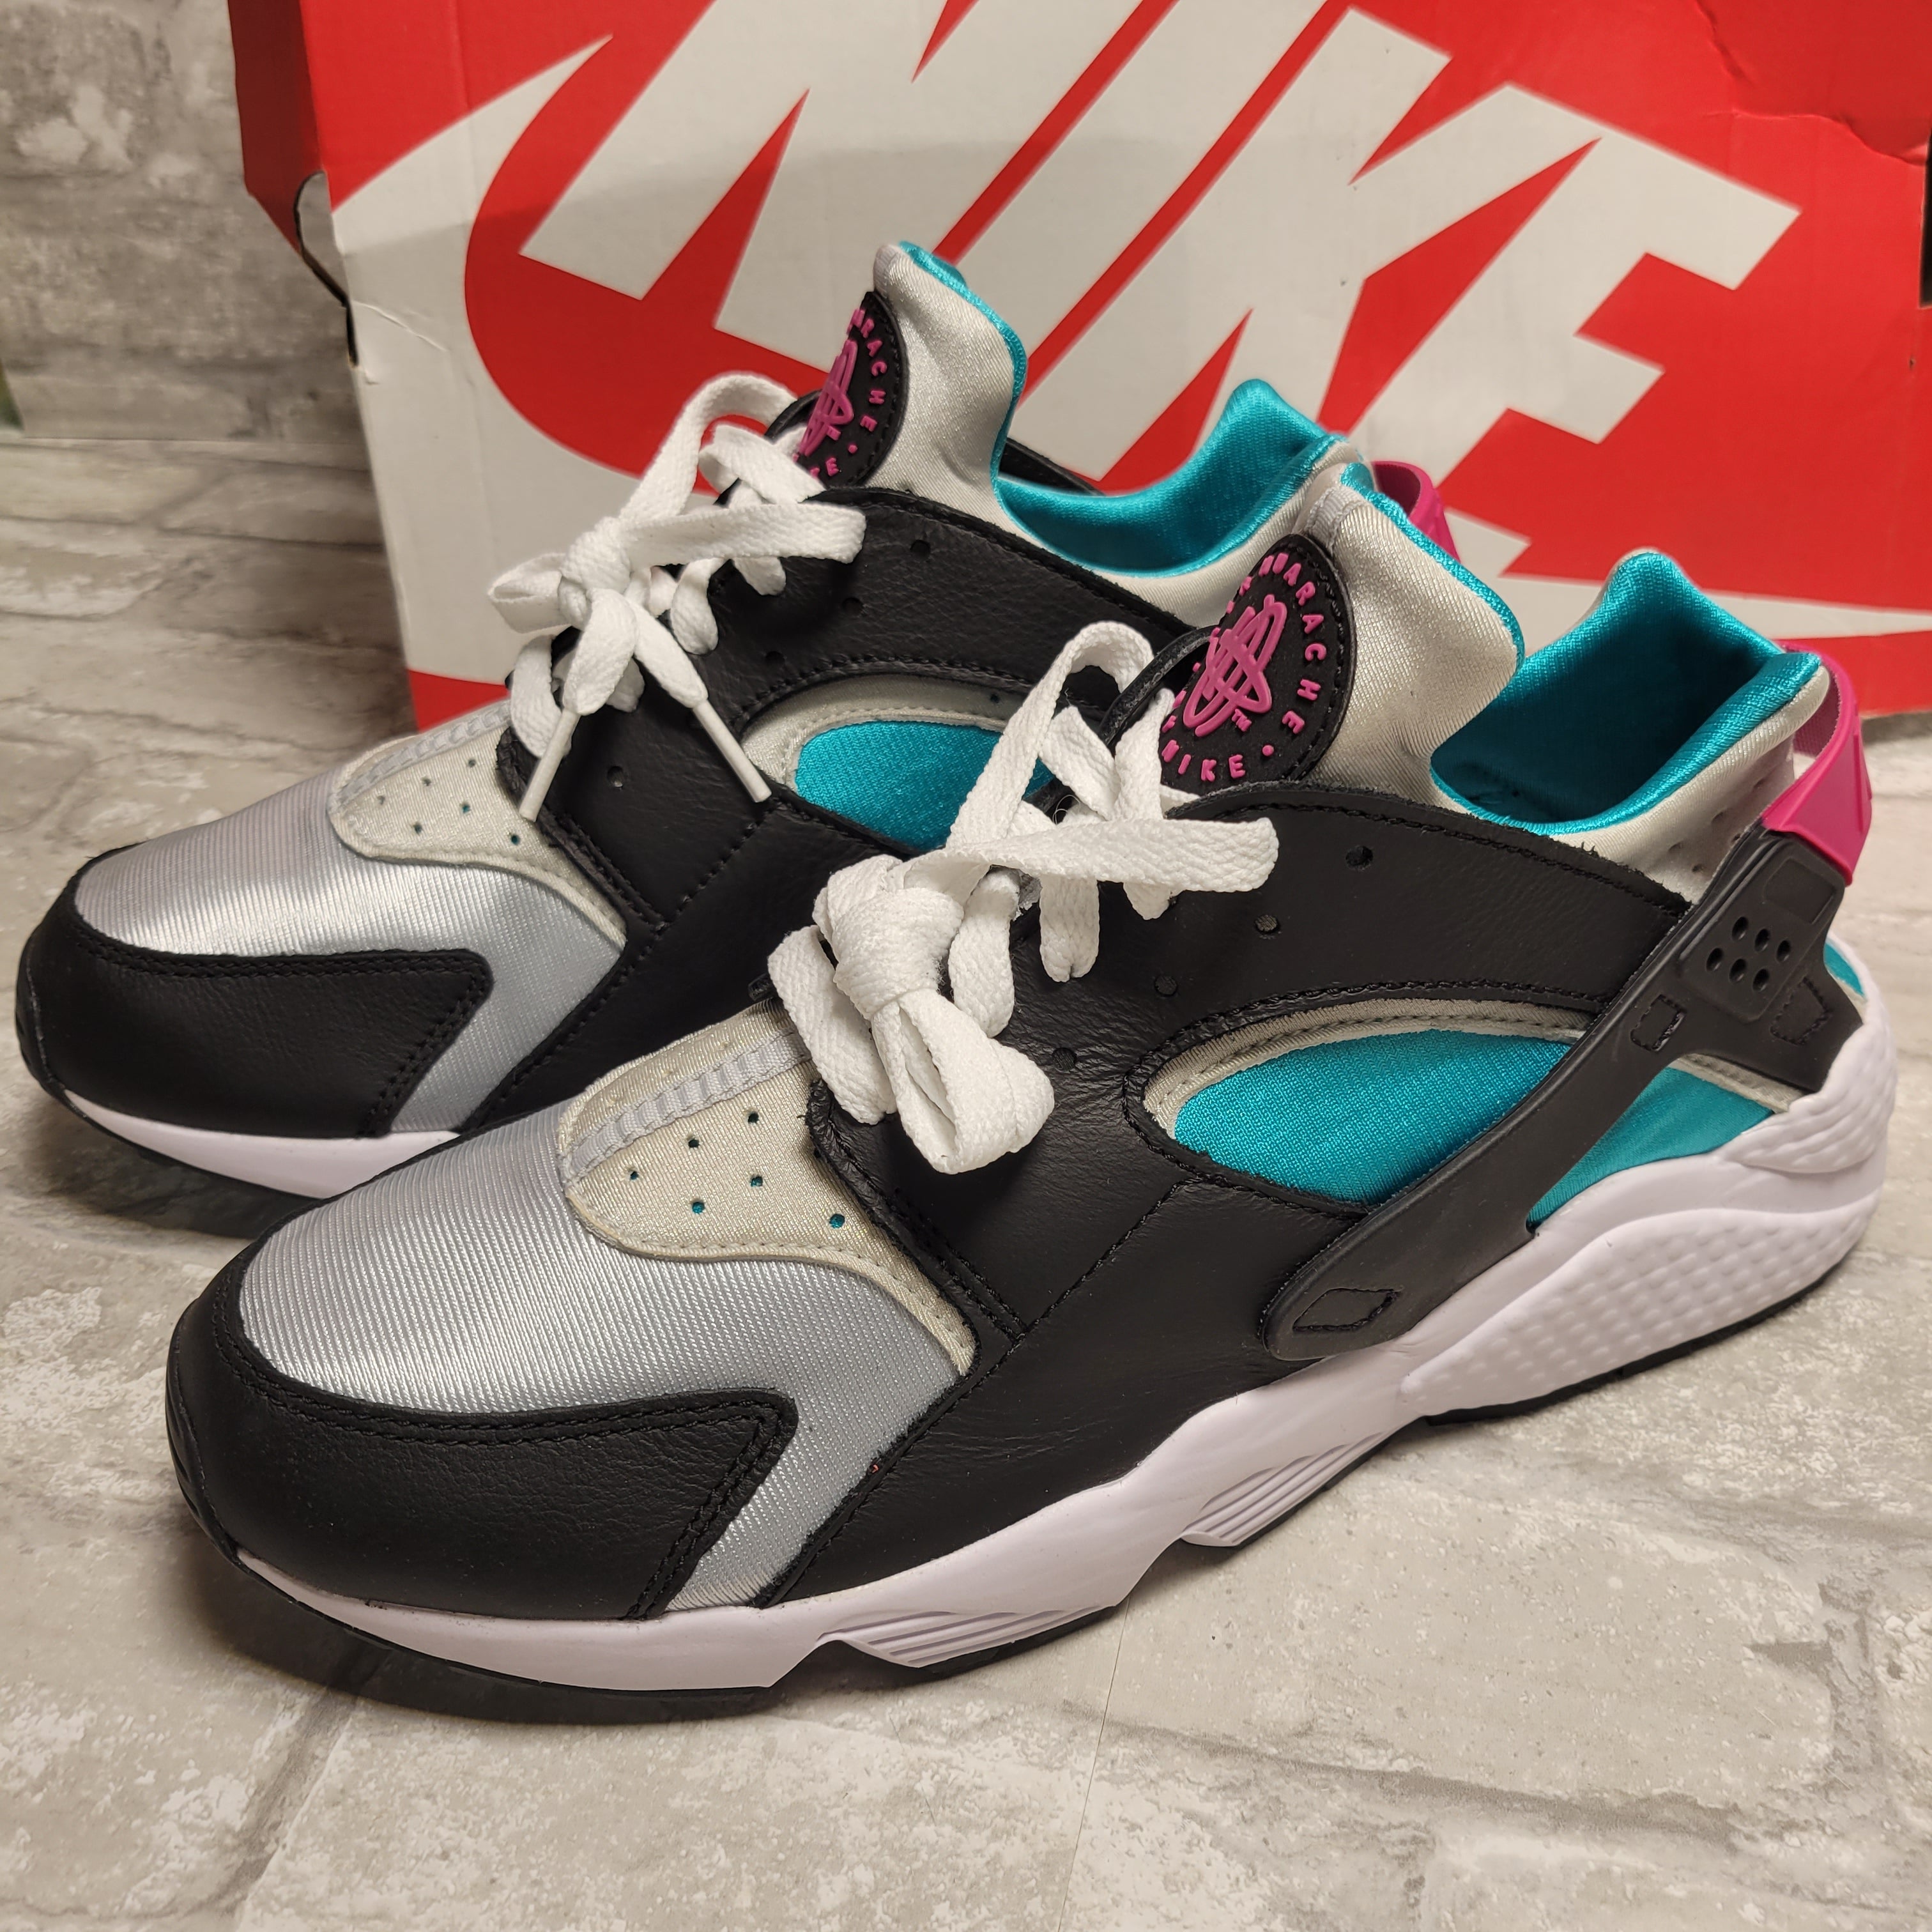 Nike Air Huarache Men's Shoes, Black/Pink, Size 11 (8068526604526)